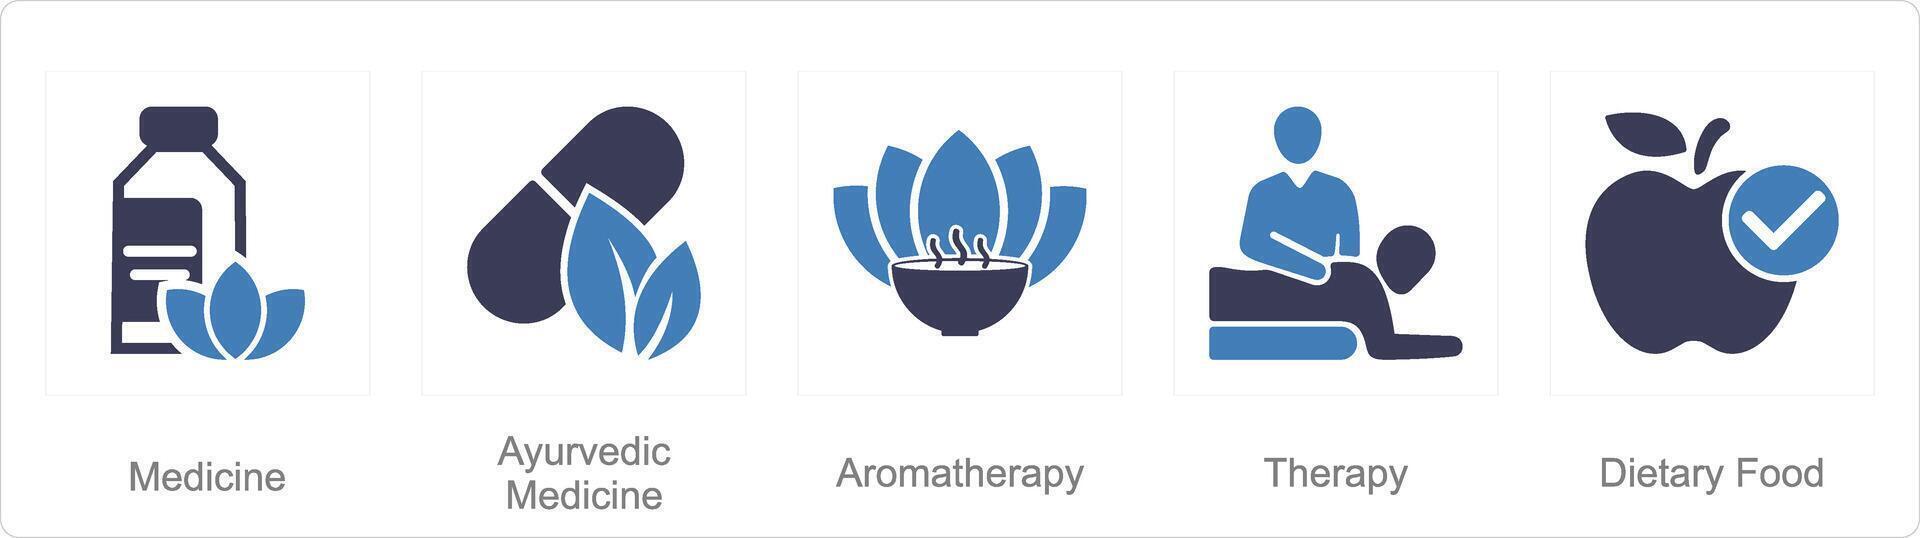 A set of 5 Mix icons as medicine, ayurvedic medicine, aromatherapy vector